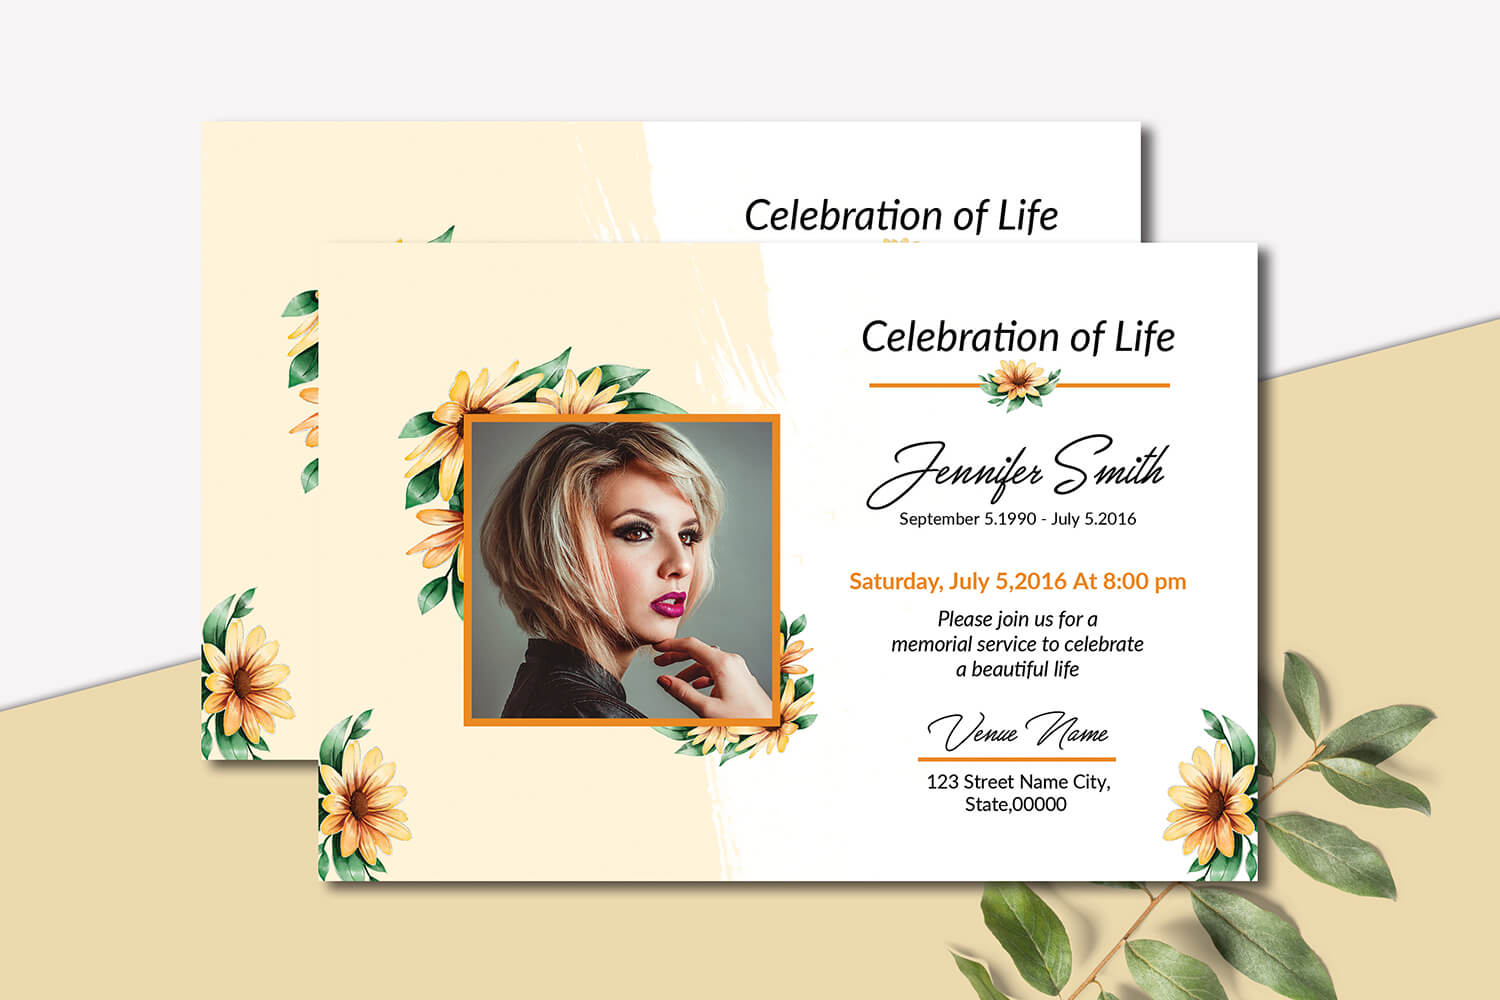 Funeral Announcement Invitation Card Template Regarding Funeral Invitation Card Template